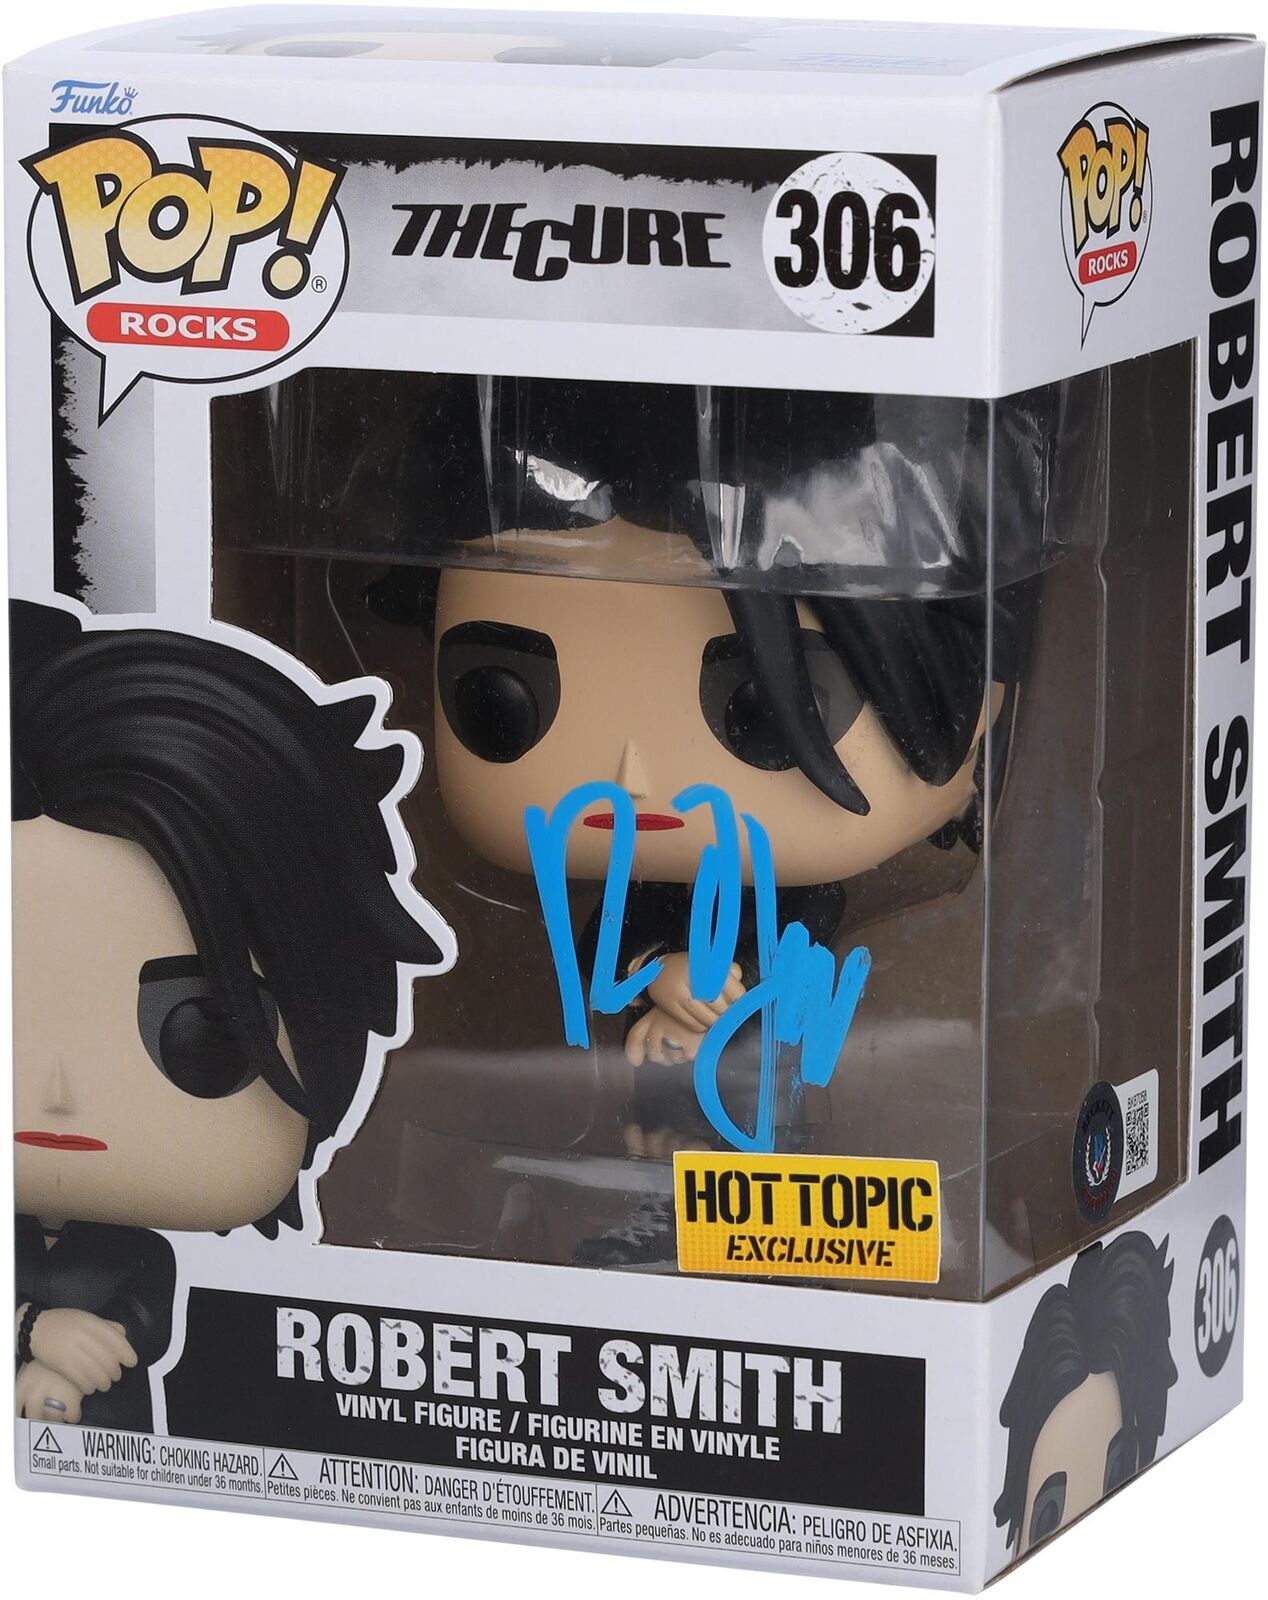 Robert Smith (Musician) The Cure Figurine Item#13375659